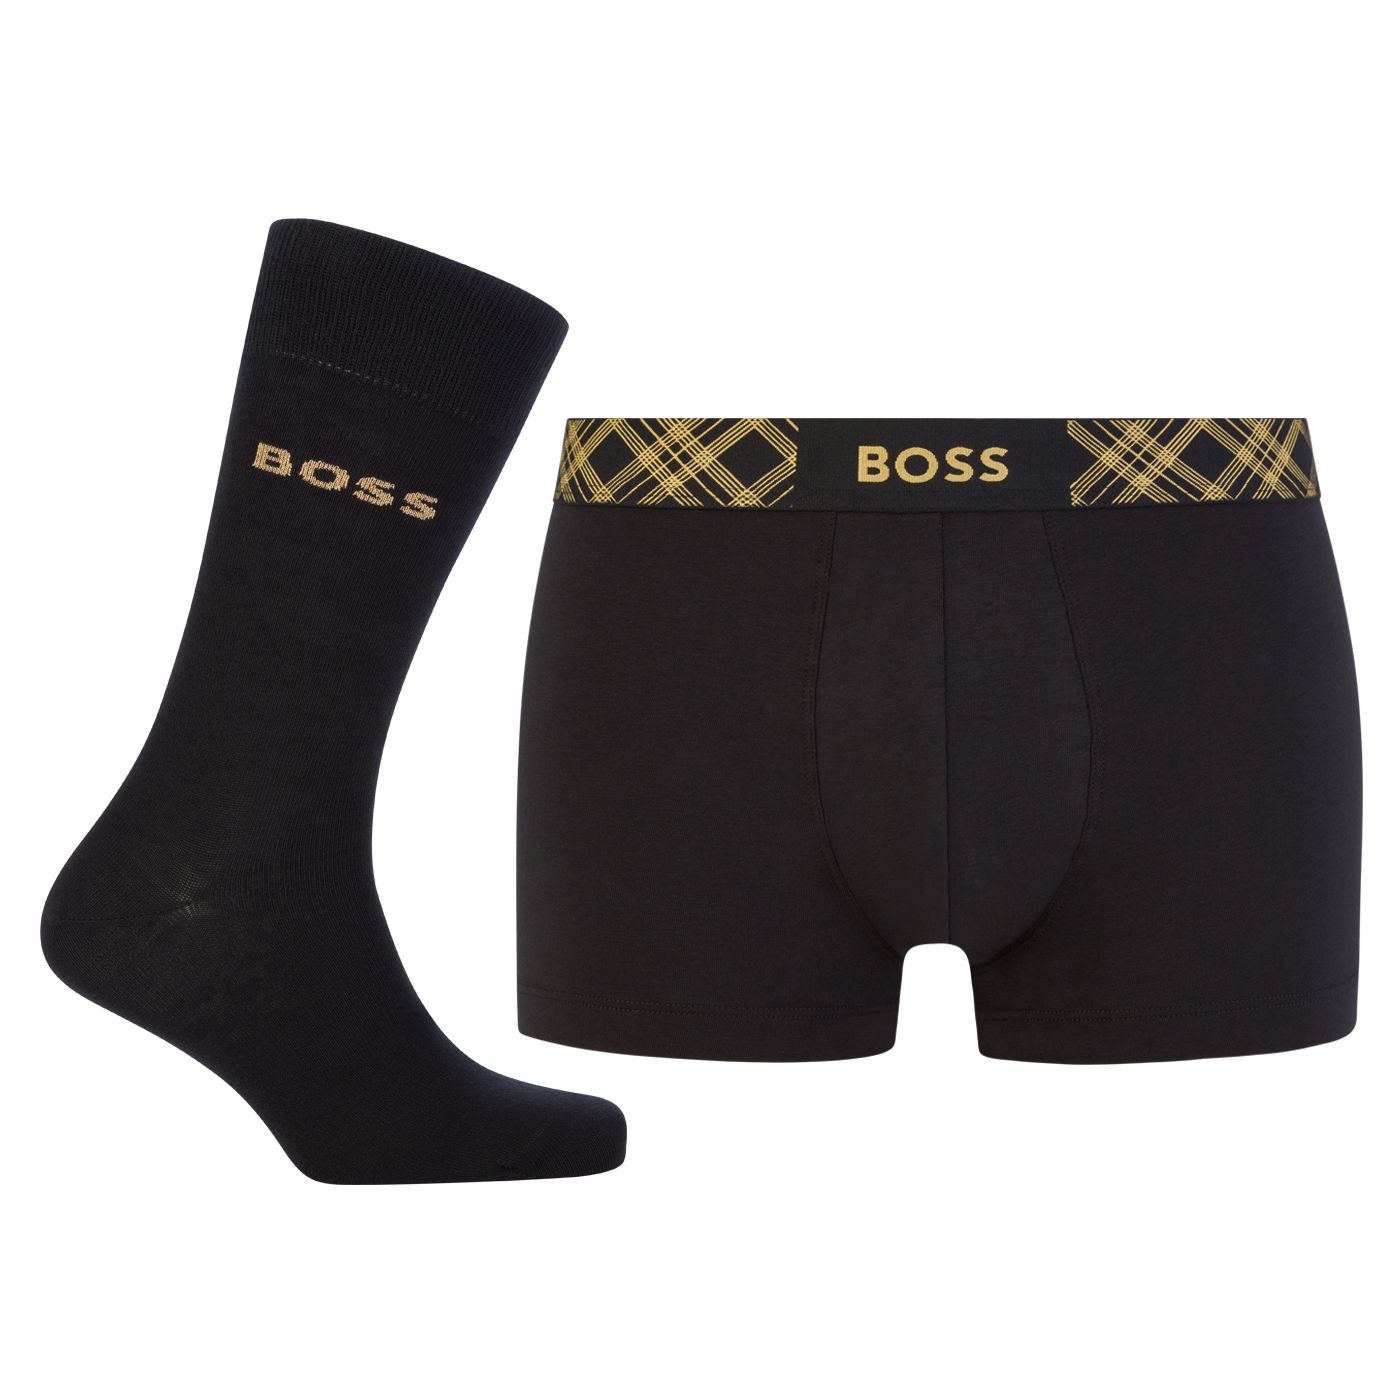 Hugo Boss Pánská sada - boxerky a ponožky BOSS 50500374-001 XXL